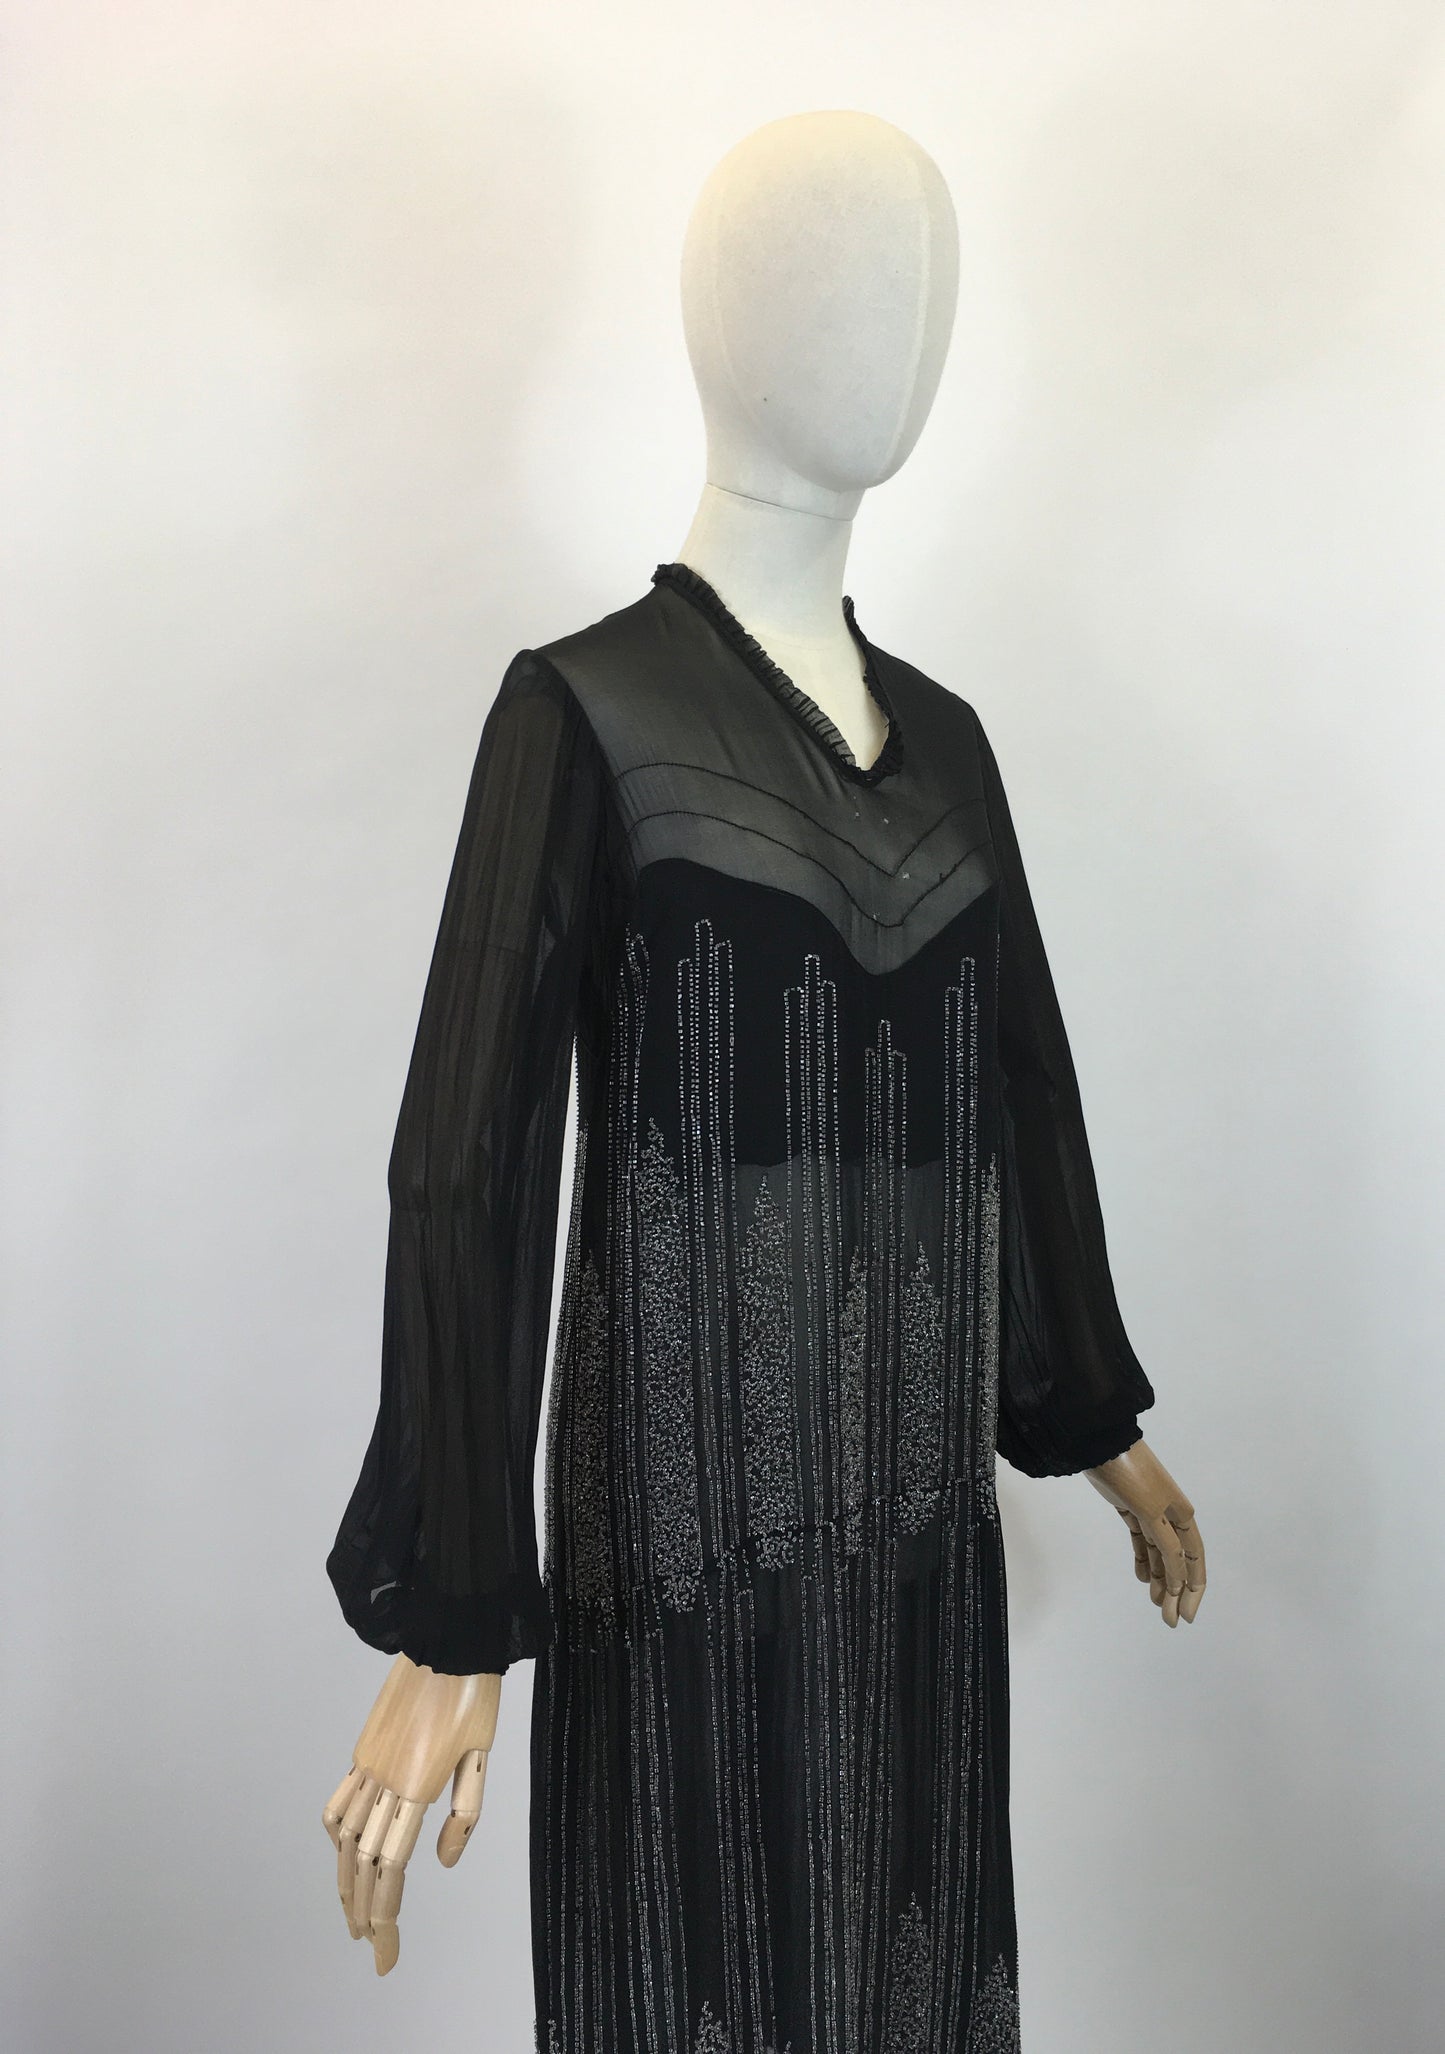 Original 1920's Sensational Beaded Dress - A Divine Example From the Era of the Flapper